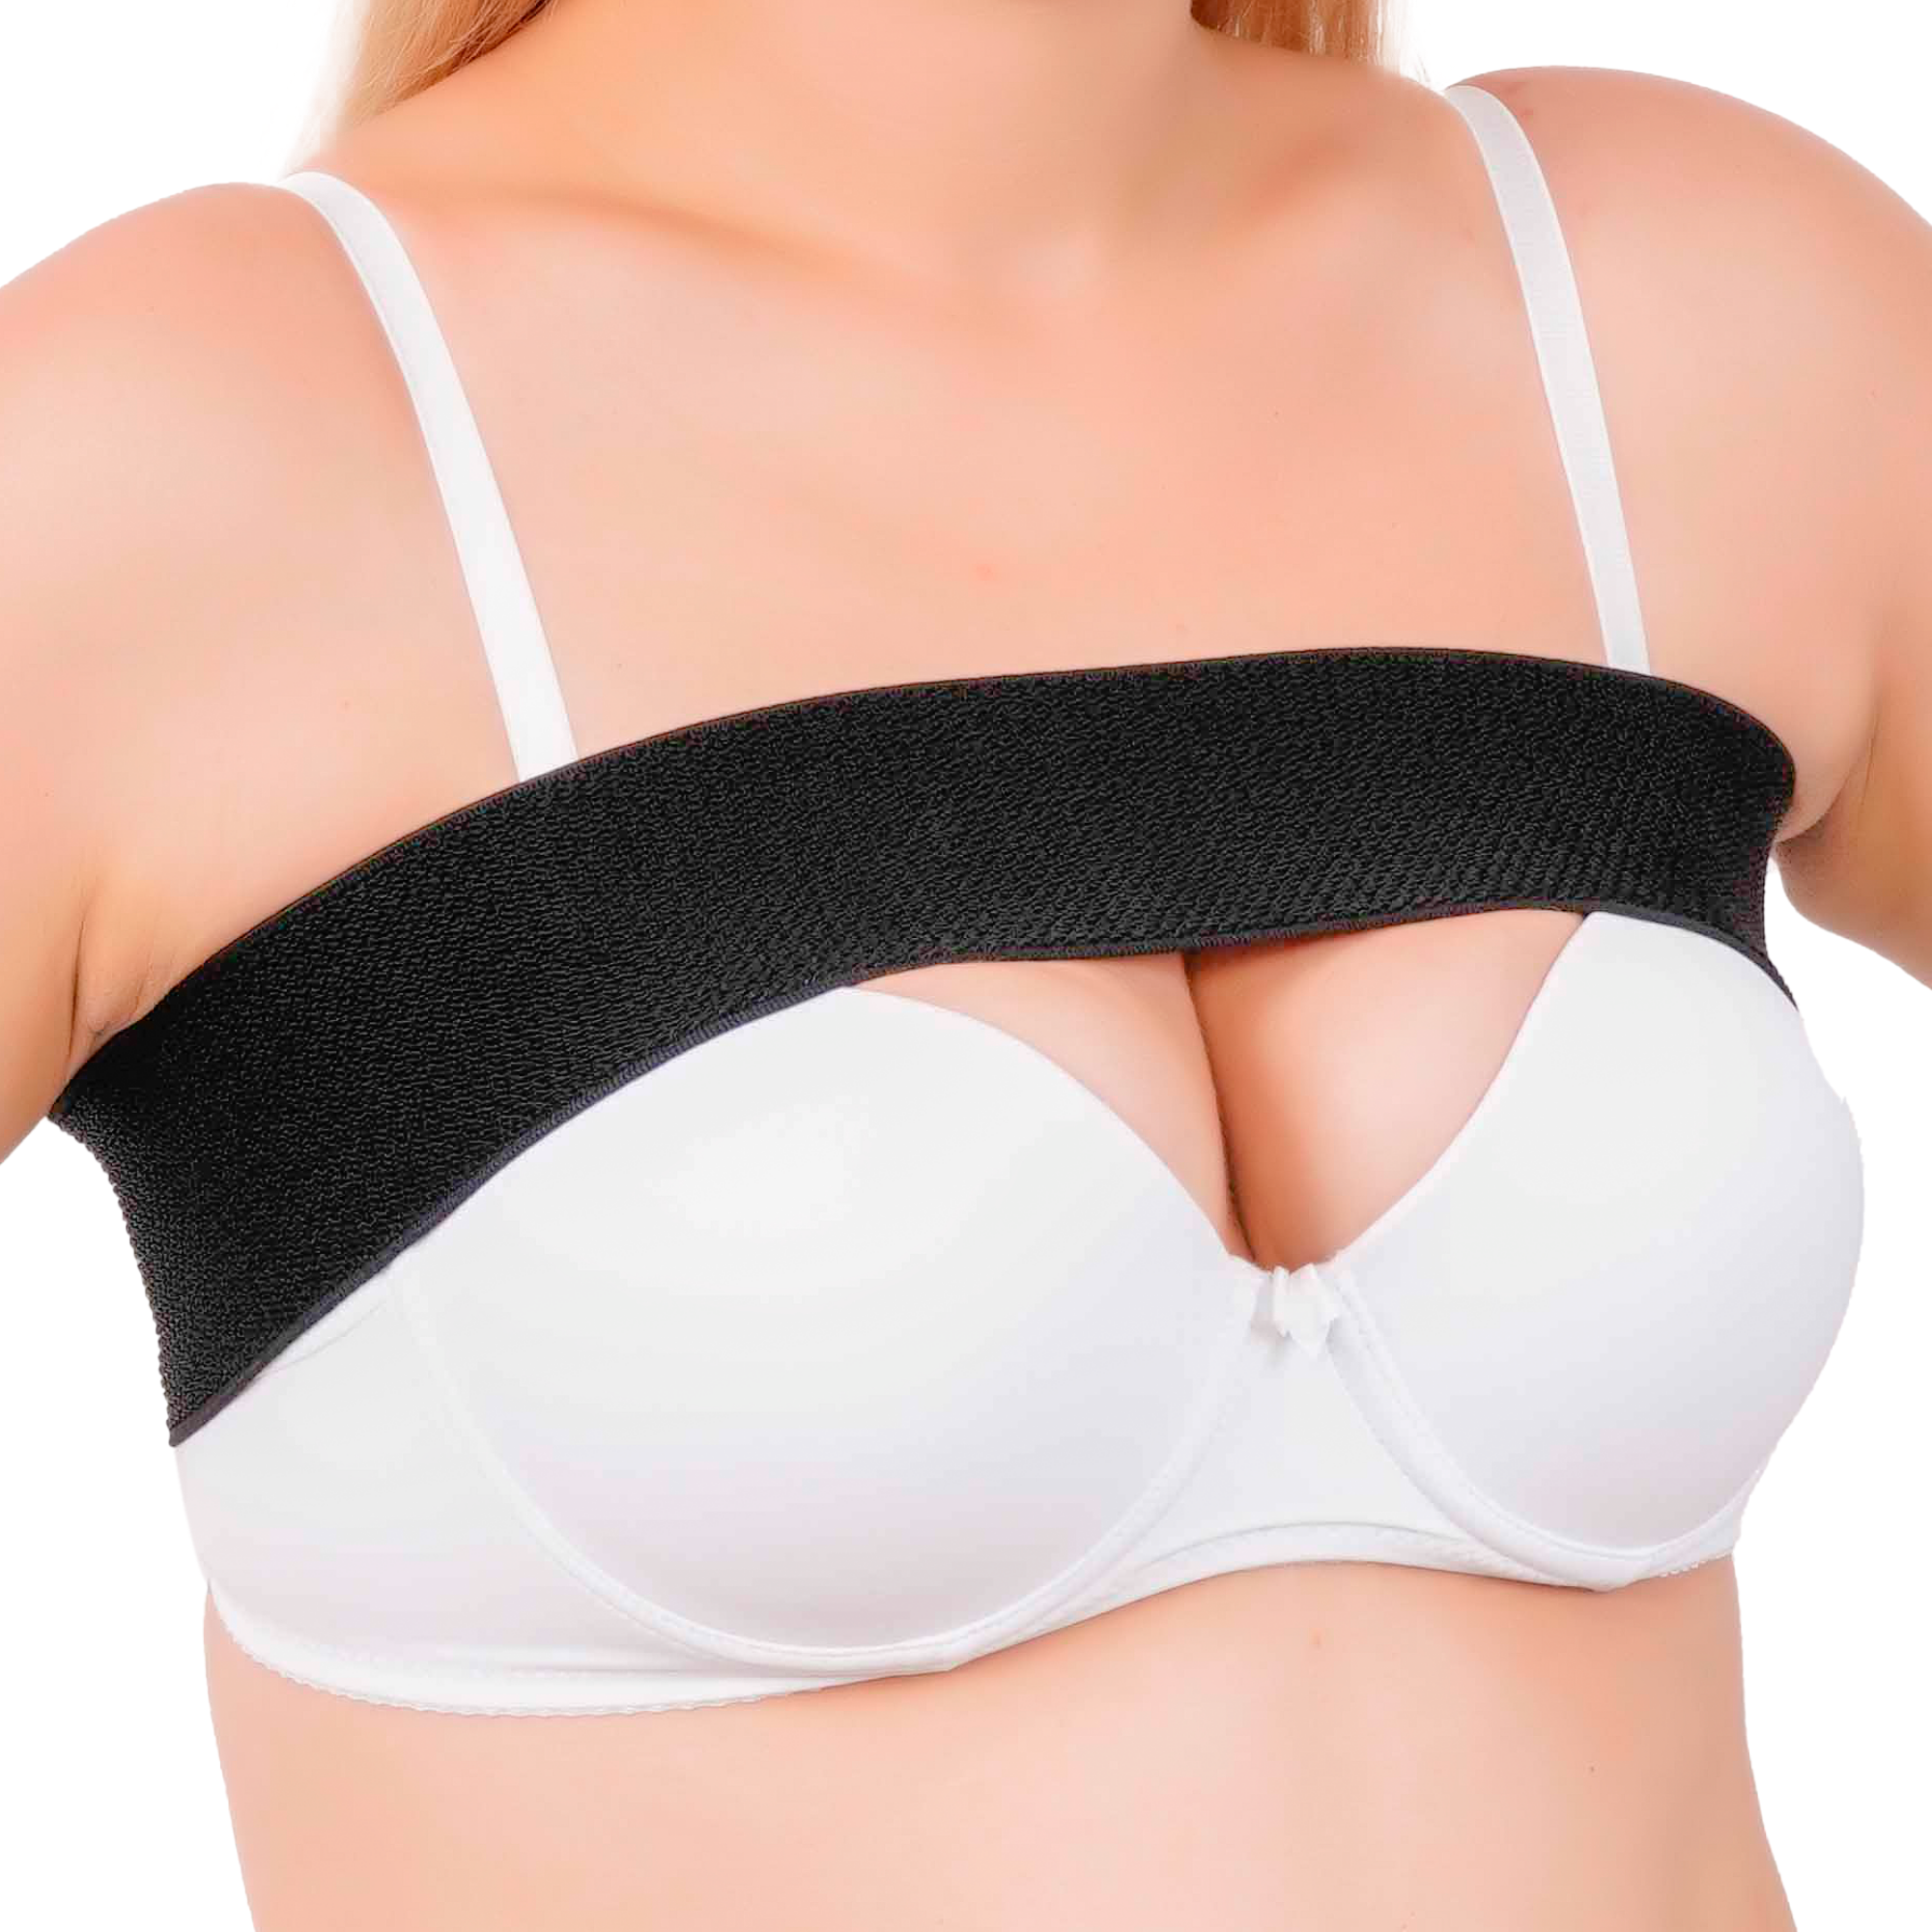 ladies' breast support bra implant stabilizer